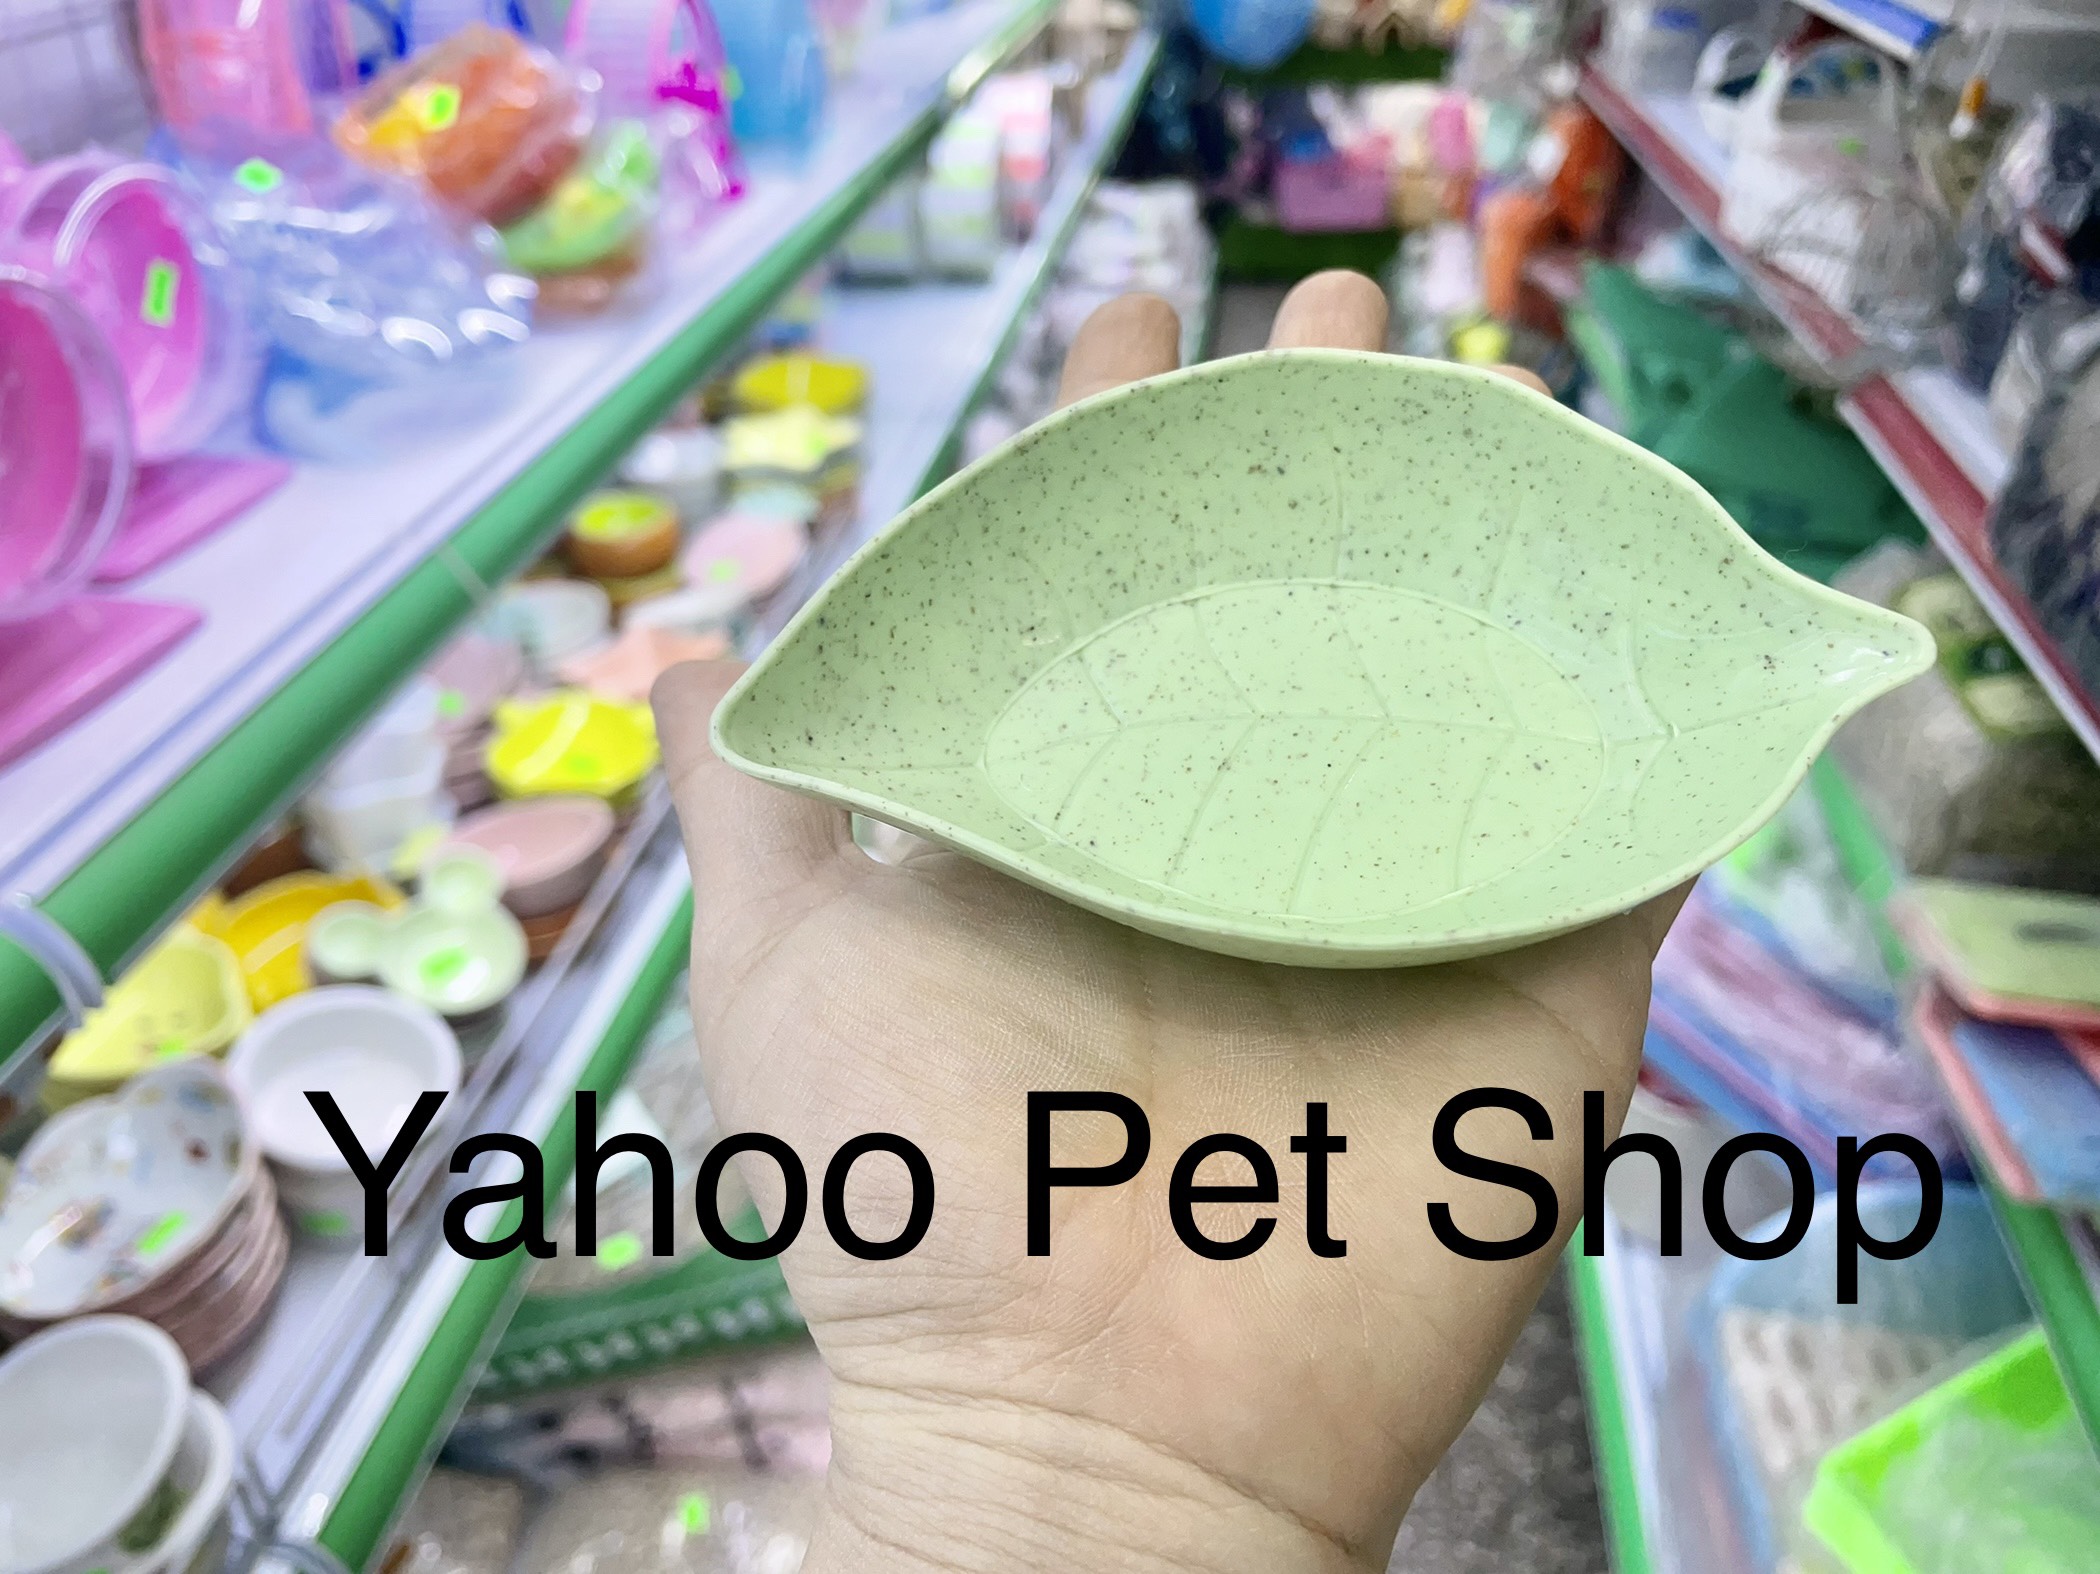 Khay đồ ăn - Hộ Kinh Doanh Yahoo Pet Shop